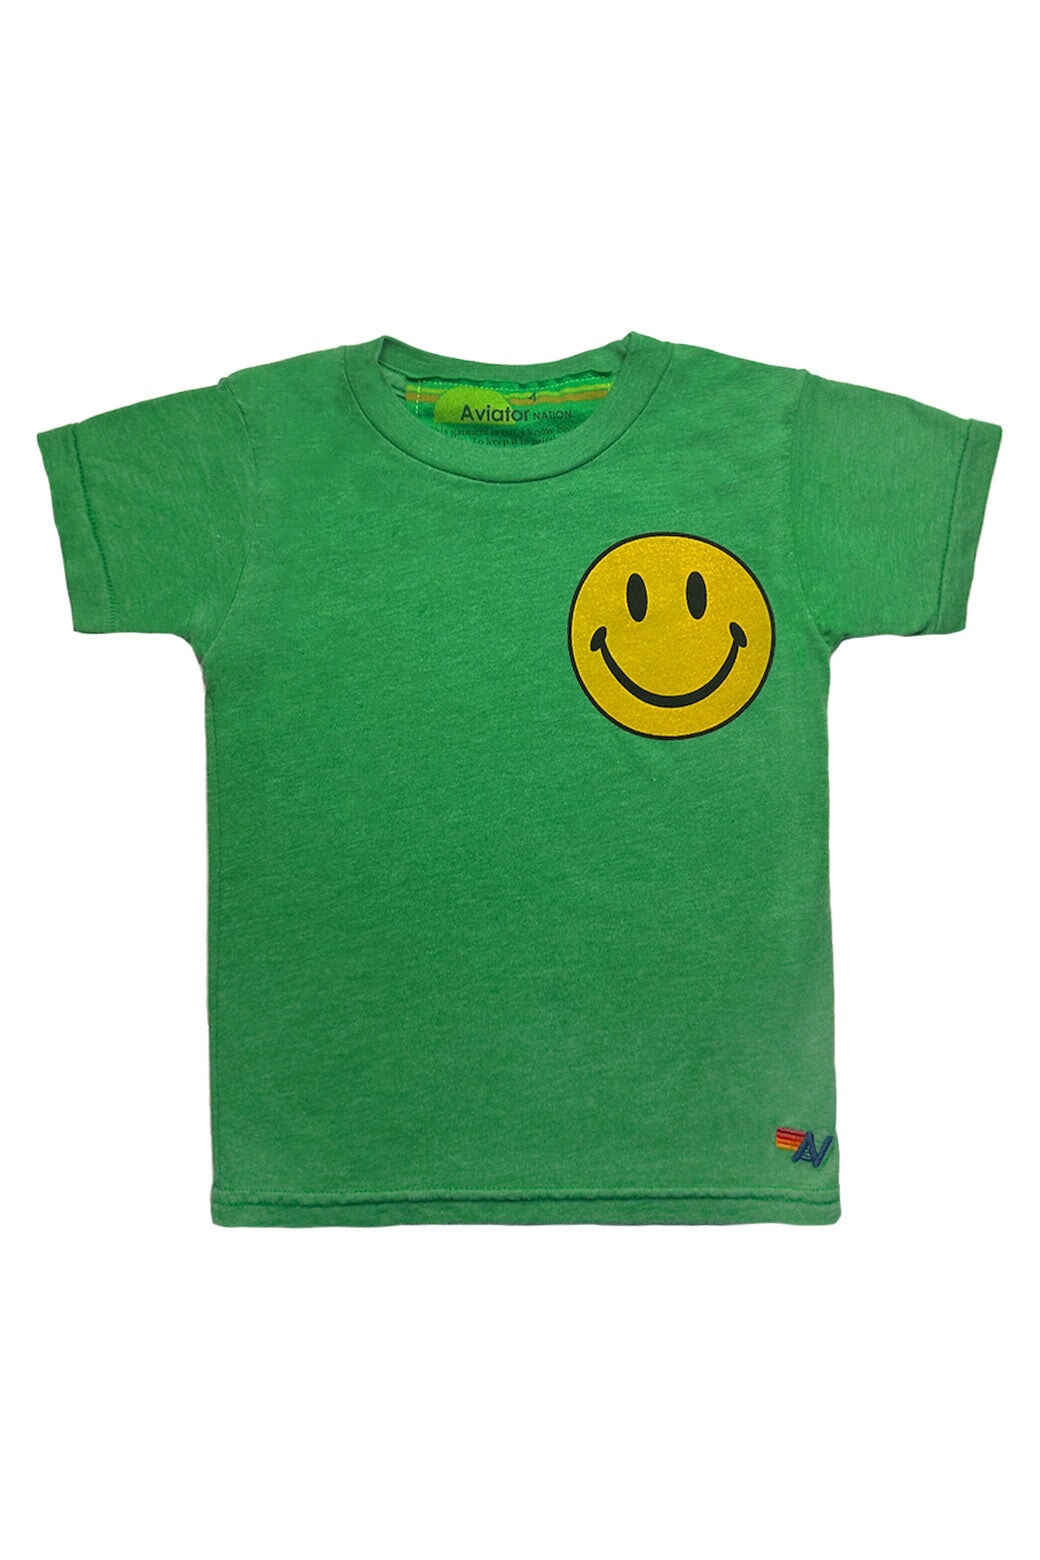 KID'S SMILEY 2 TEE - KELLY GREEN Kid's Tee Aviator Nation 